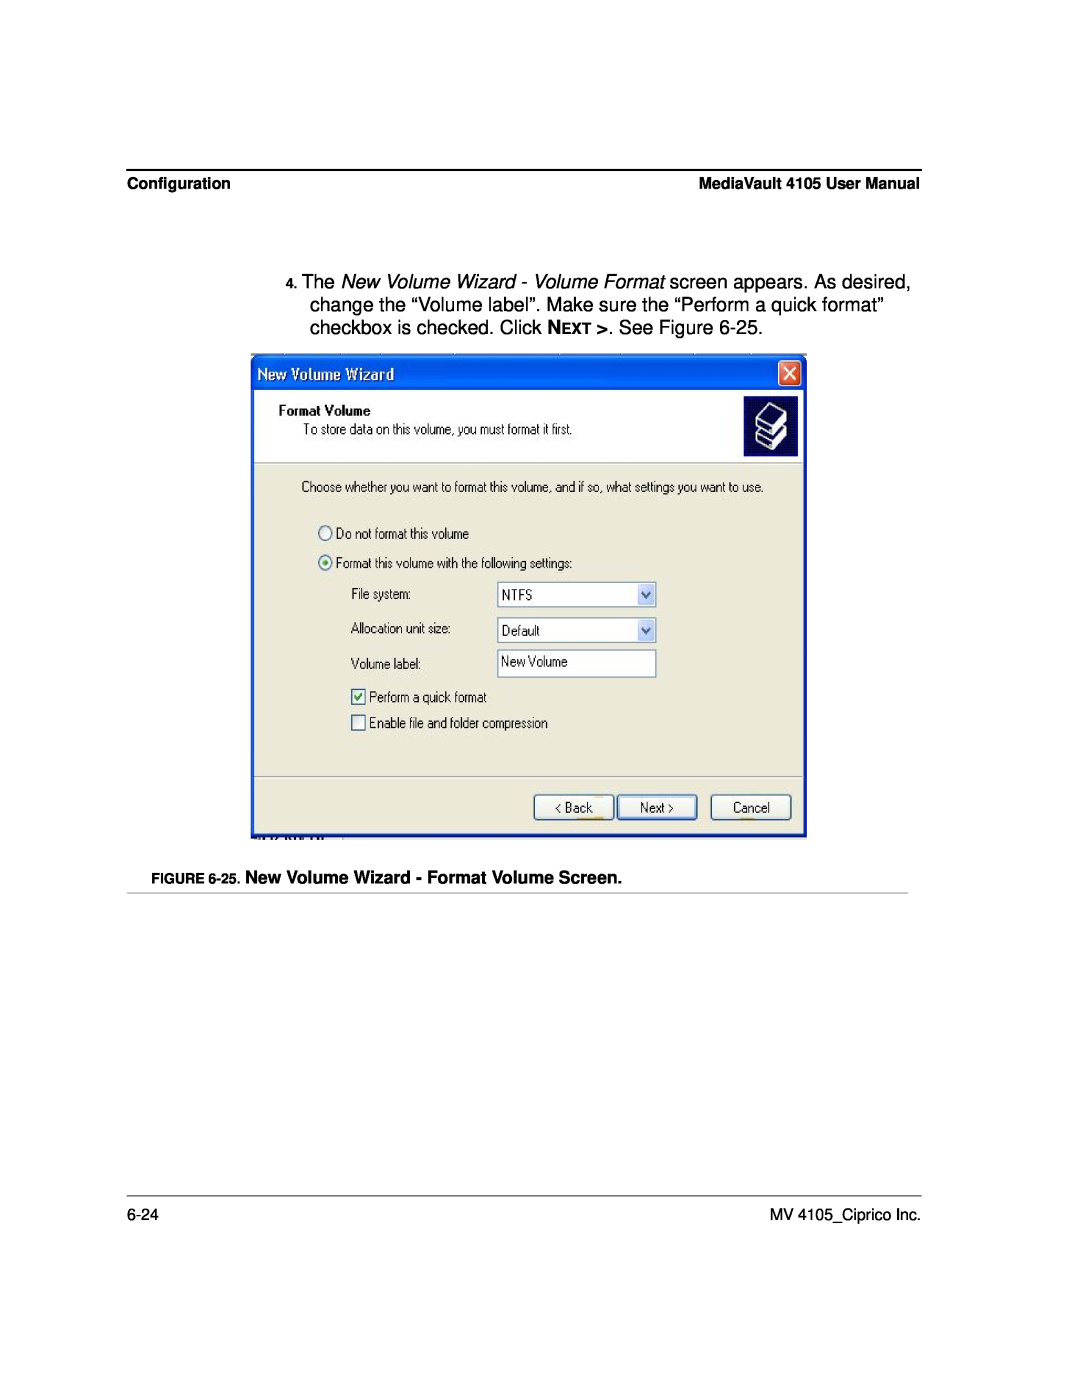 Ciprico 4105 Series user manual 25. New Volume Wizard - Format Volume Screen, MediaVault 4105 User Manual 